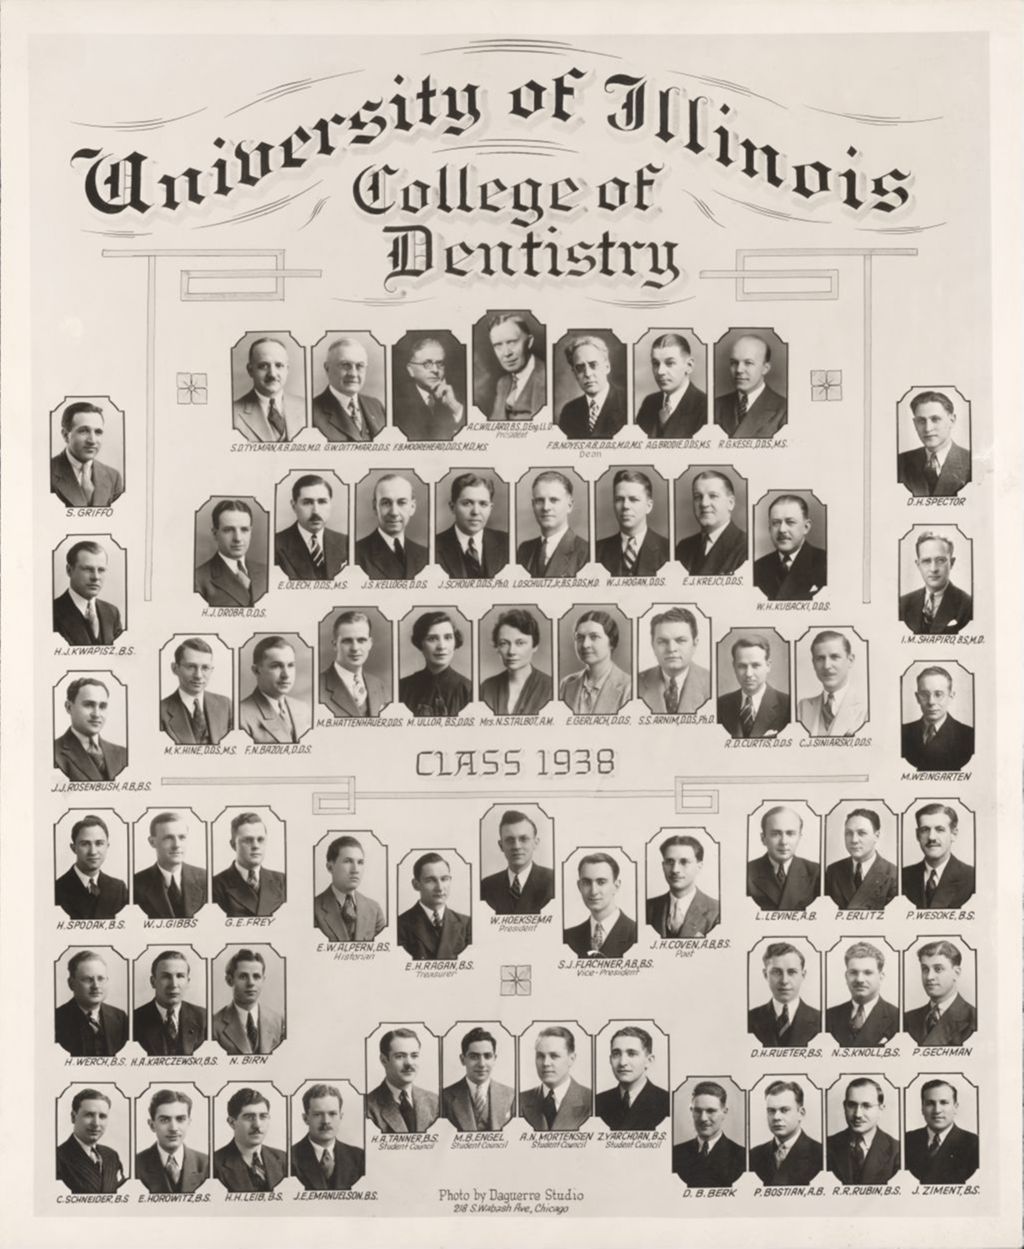 Miniature of 1938 graduating class, University of Illinois College of Dentistry